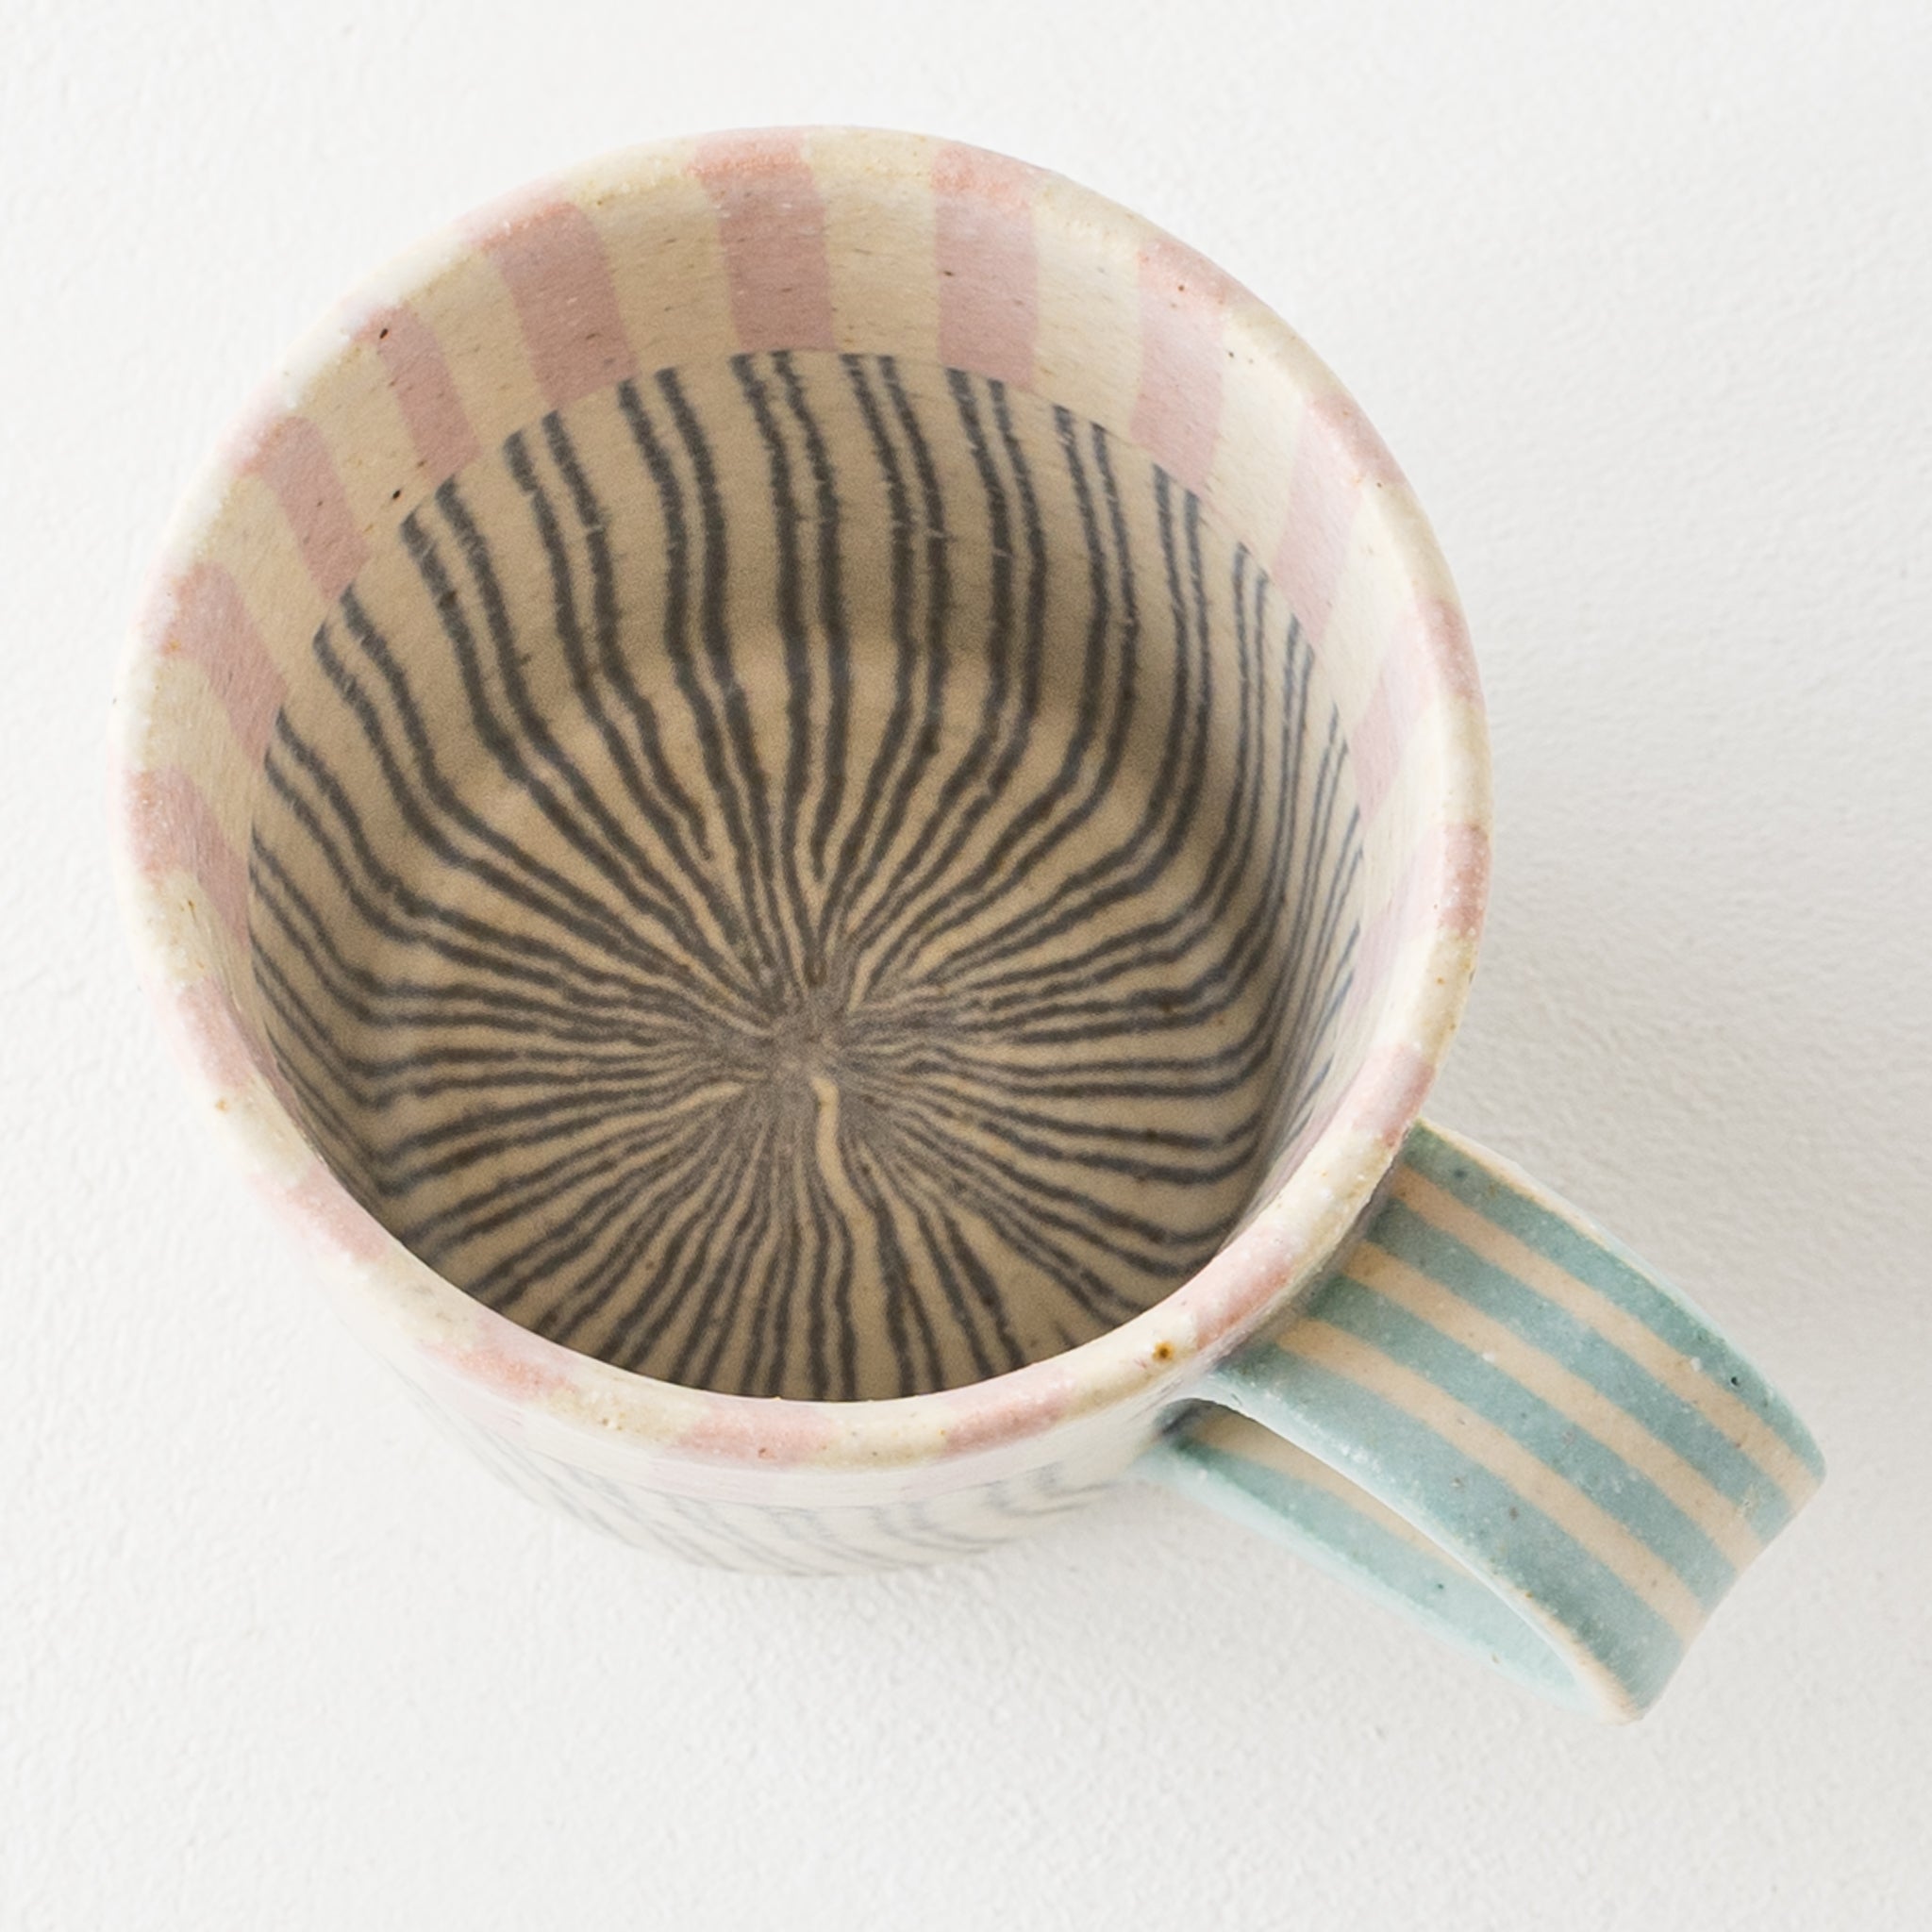 Hanako Sakashita's cute kneaded mug with a beautiful pattern on the inside